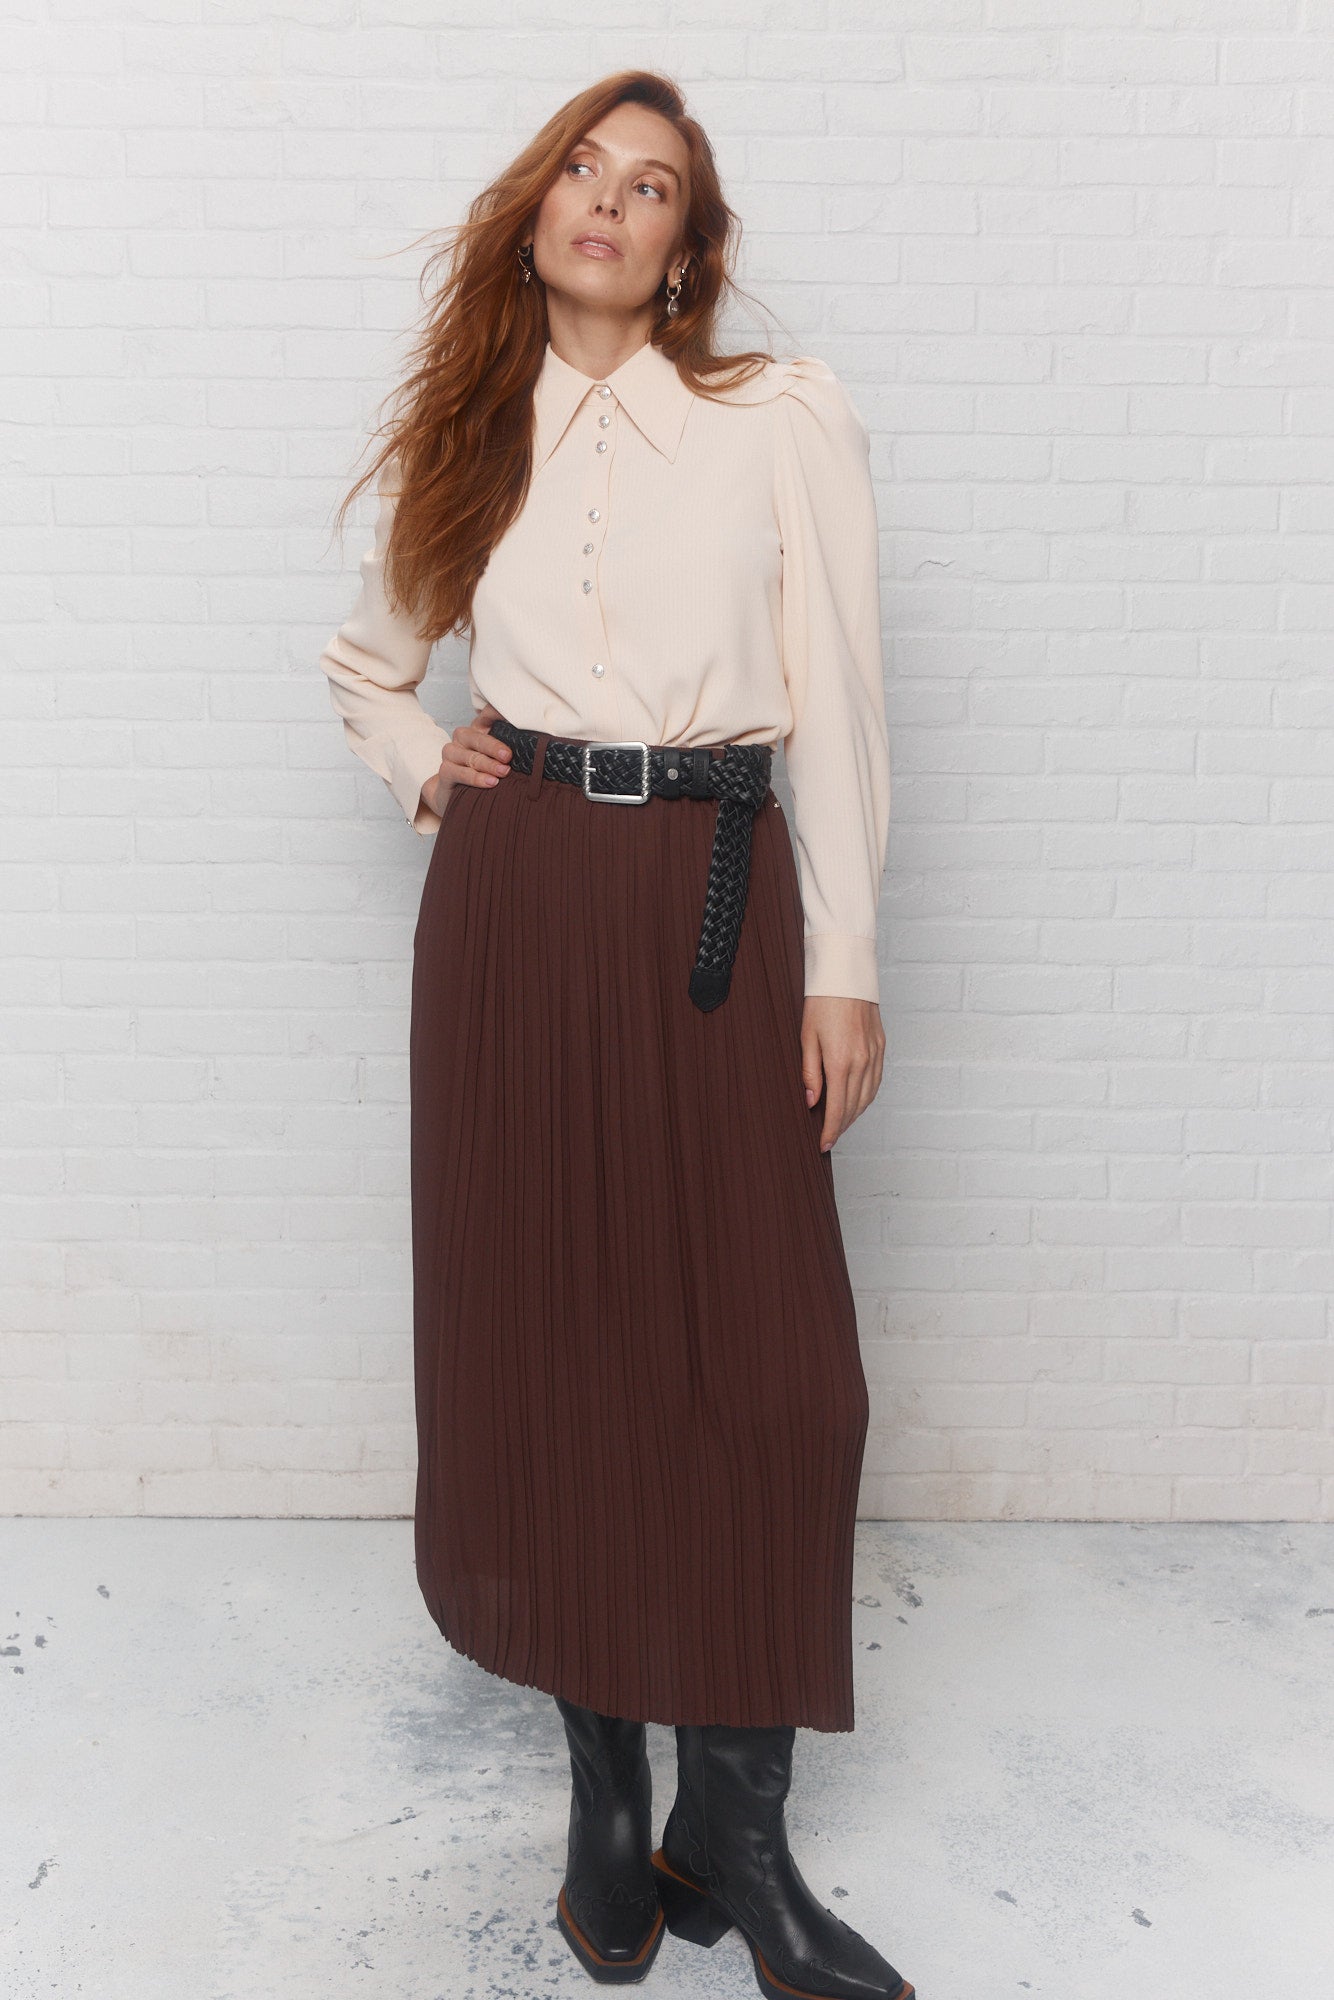 Dark brown long skirt | Lucy